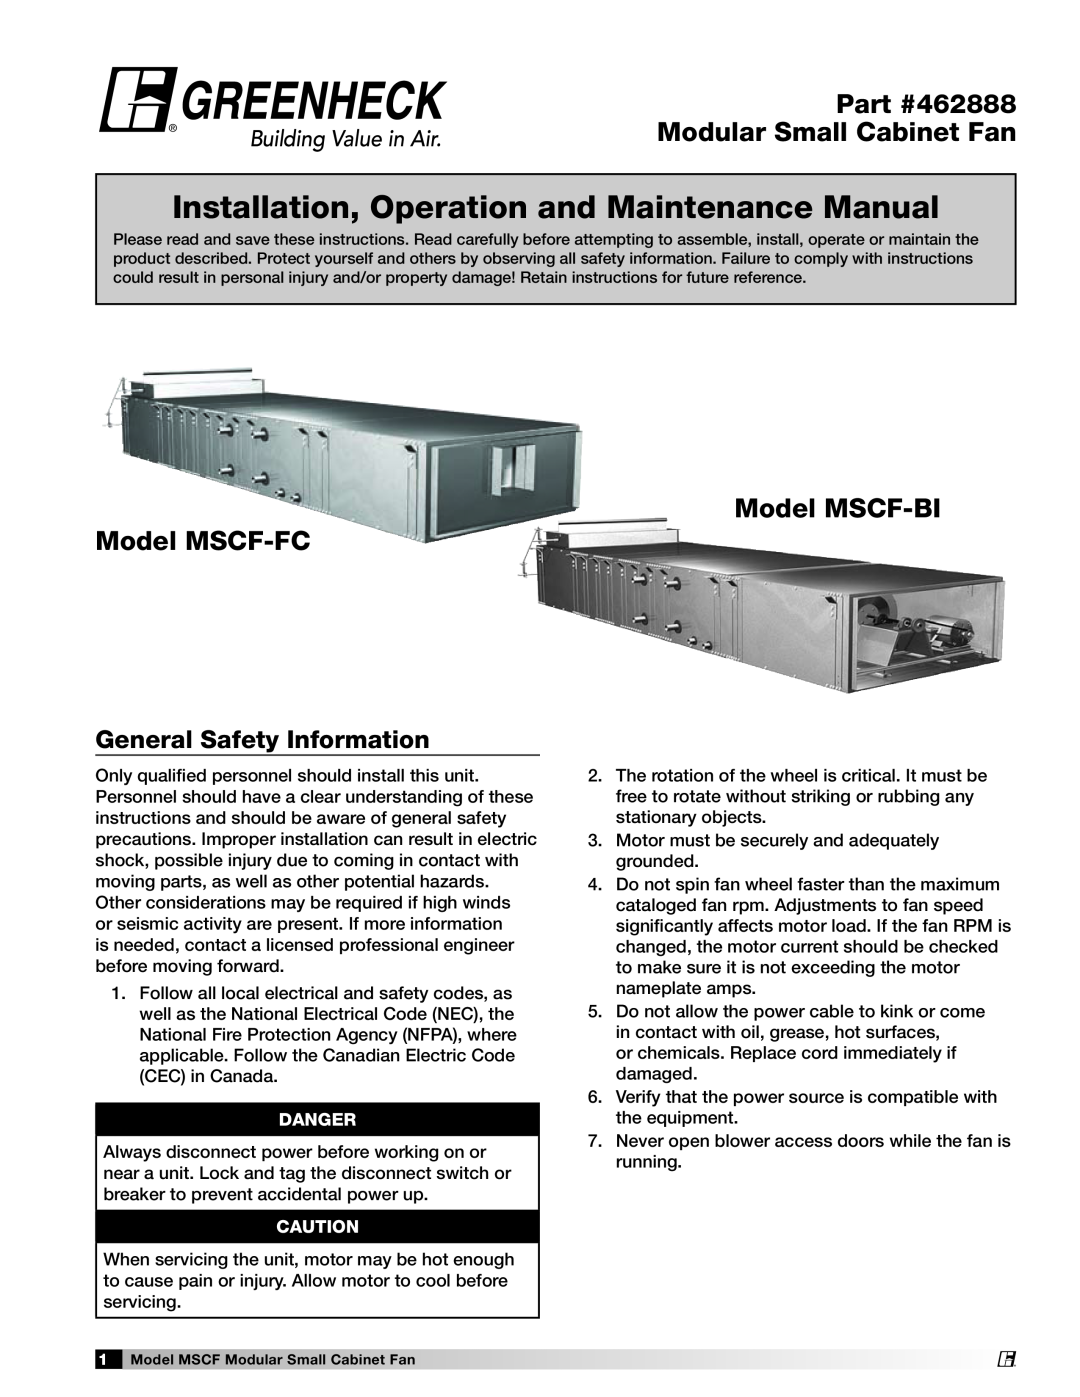 Greenheck Fan MSCF-BI manual General Safety Information, Installation, Operation and Maintenance Manual, 462888, Danger 